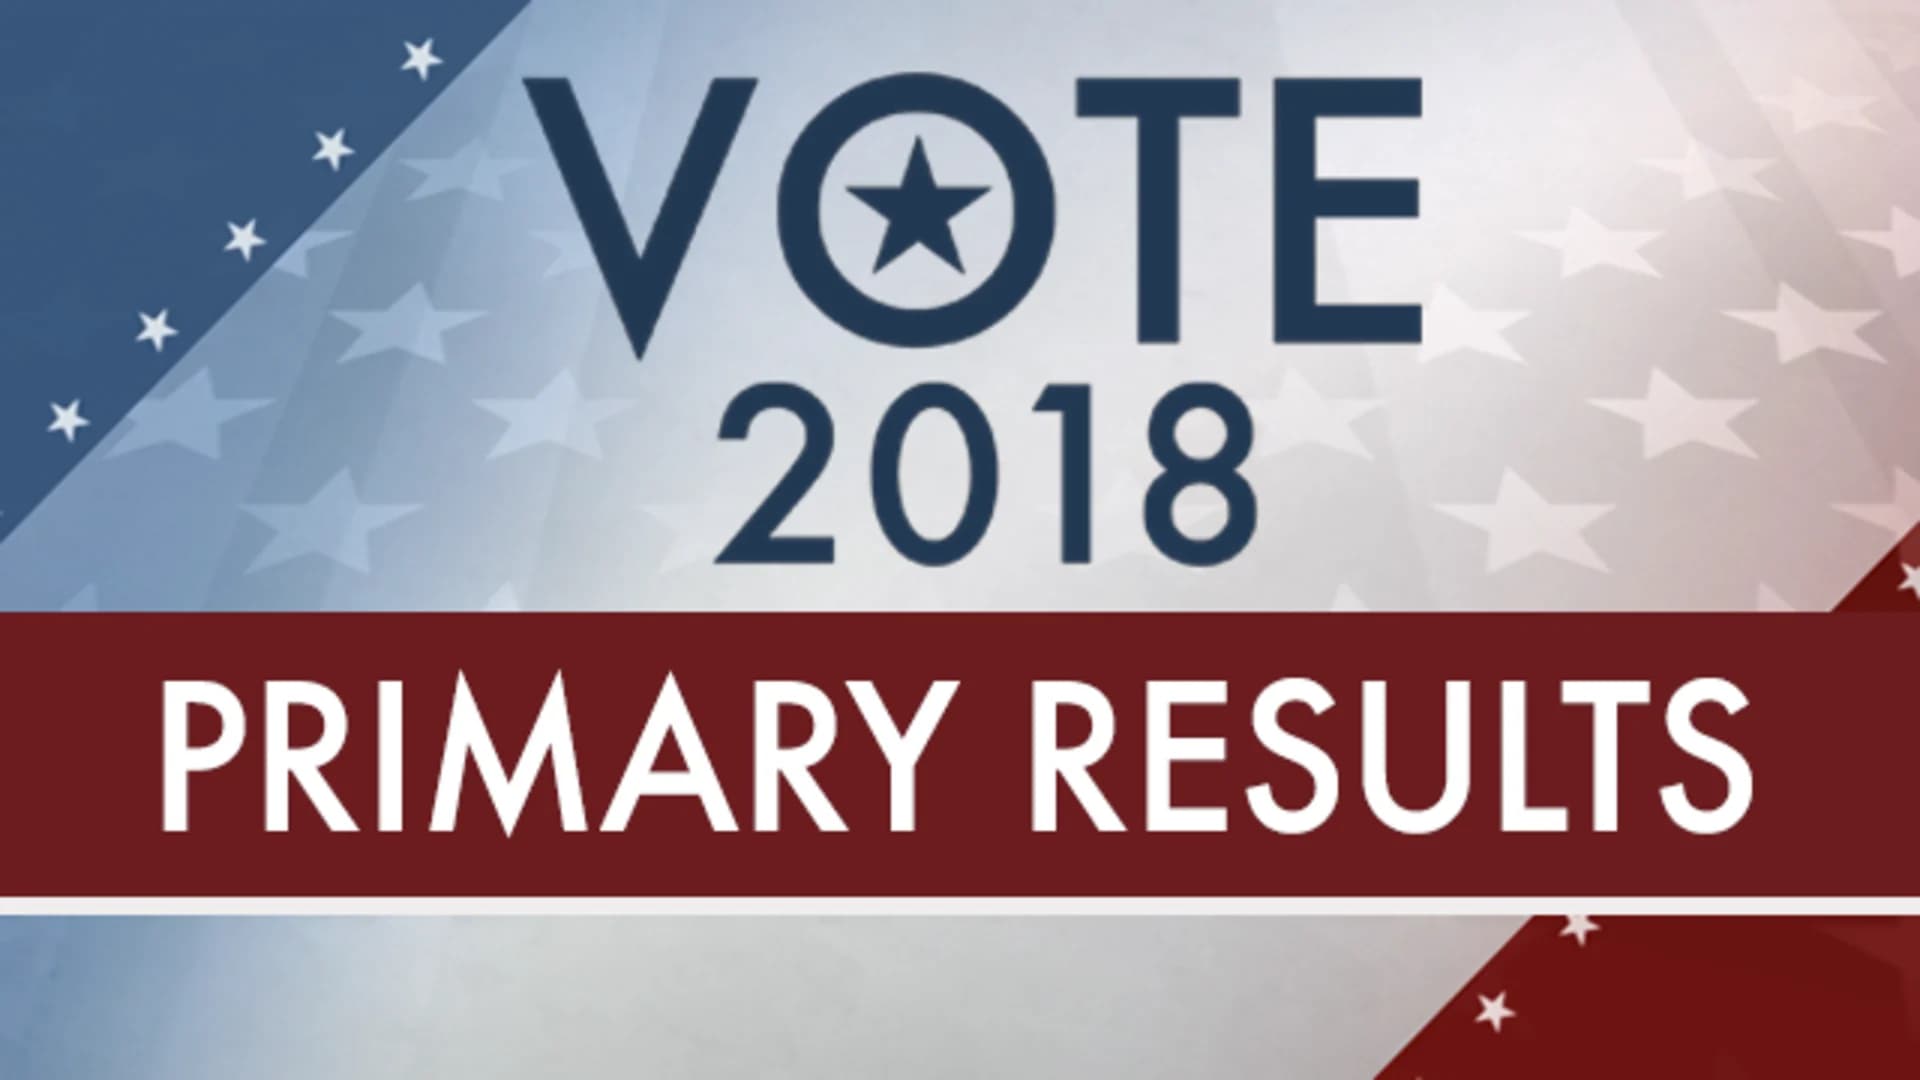 Island Vote 2018: Primary Results